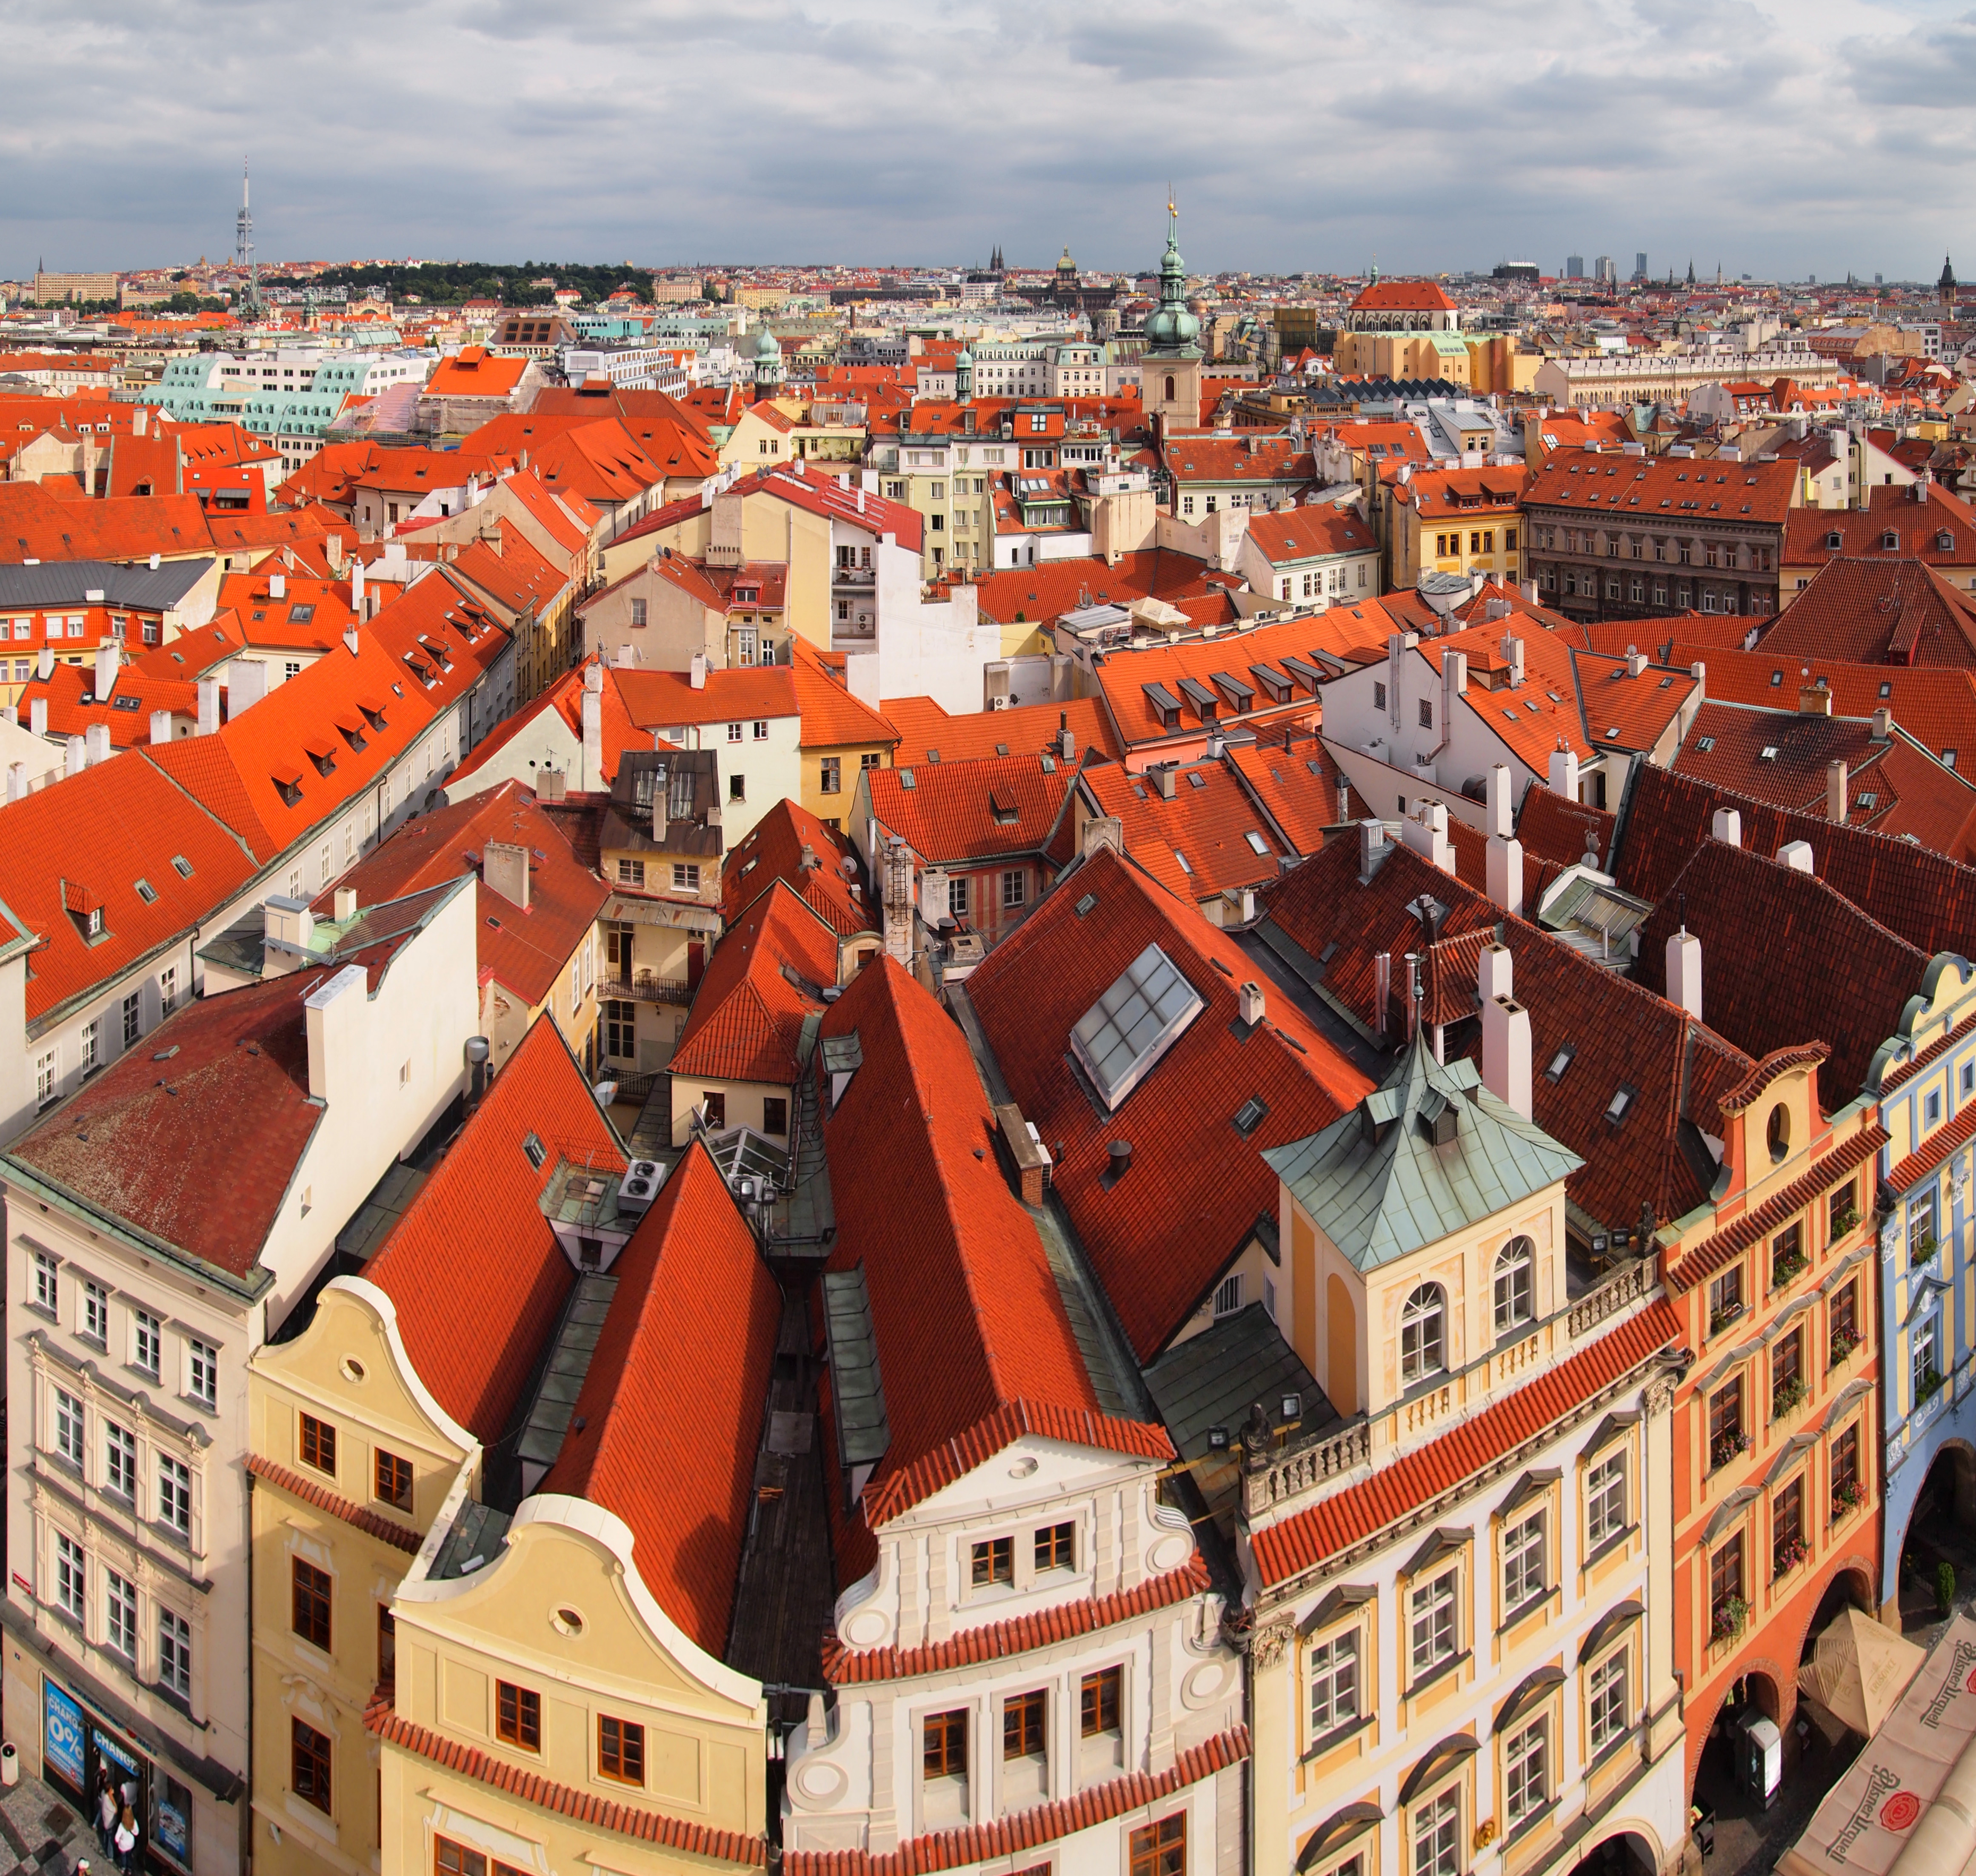 File:Roofs in Prague.jpg - Wikimedia Commons